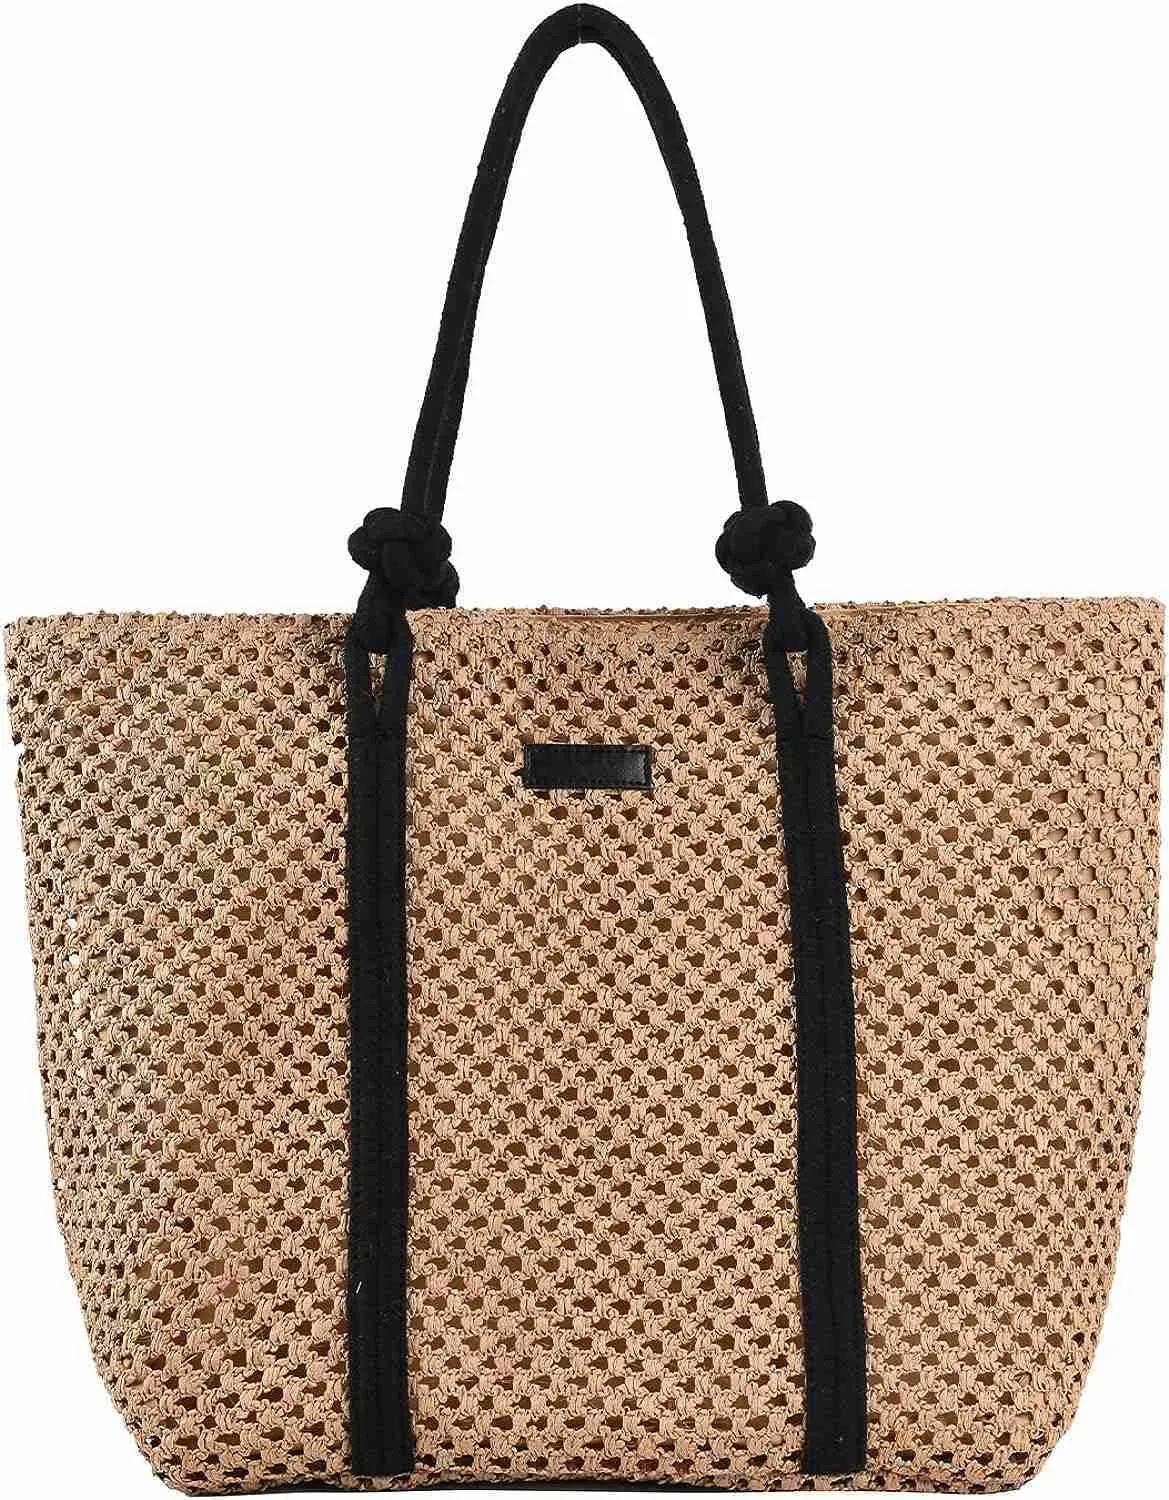 Owgse Straw Beach Bag Summer Woven Tote Bag stora axelhandväska Straw Purses and Handbags for Women Vacation HKD230807